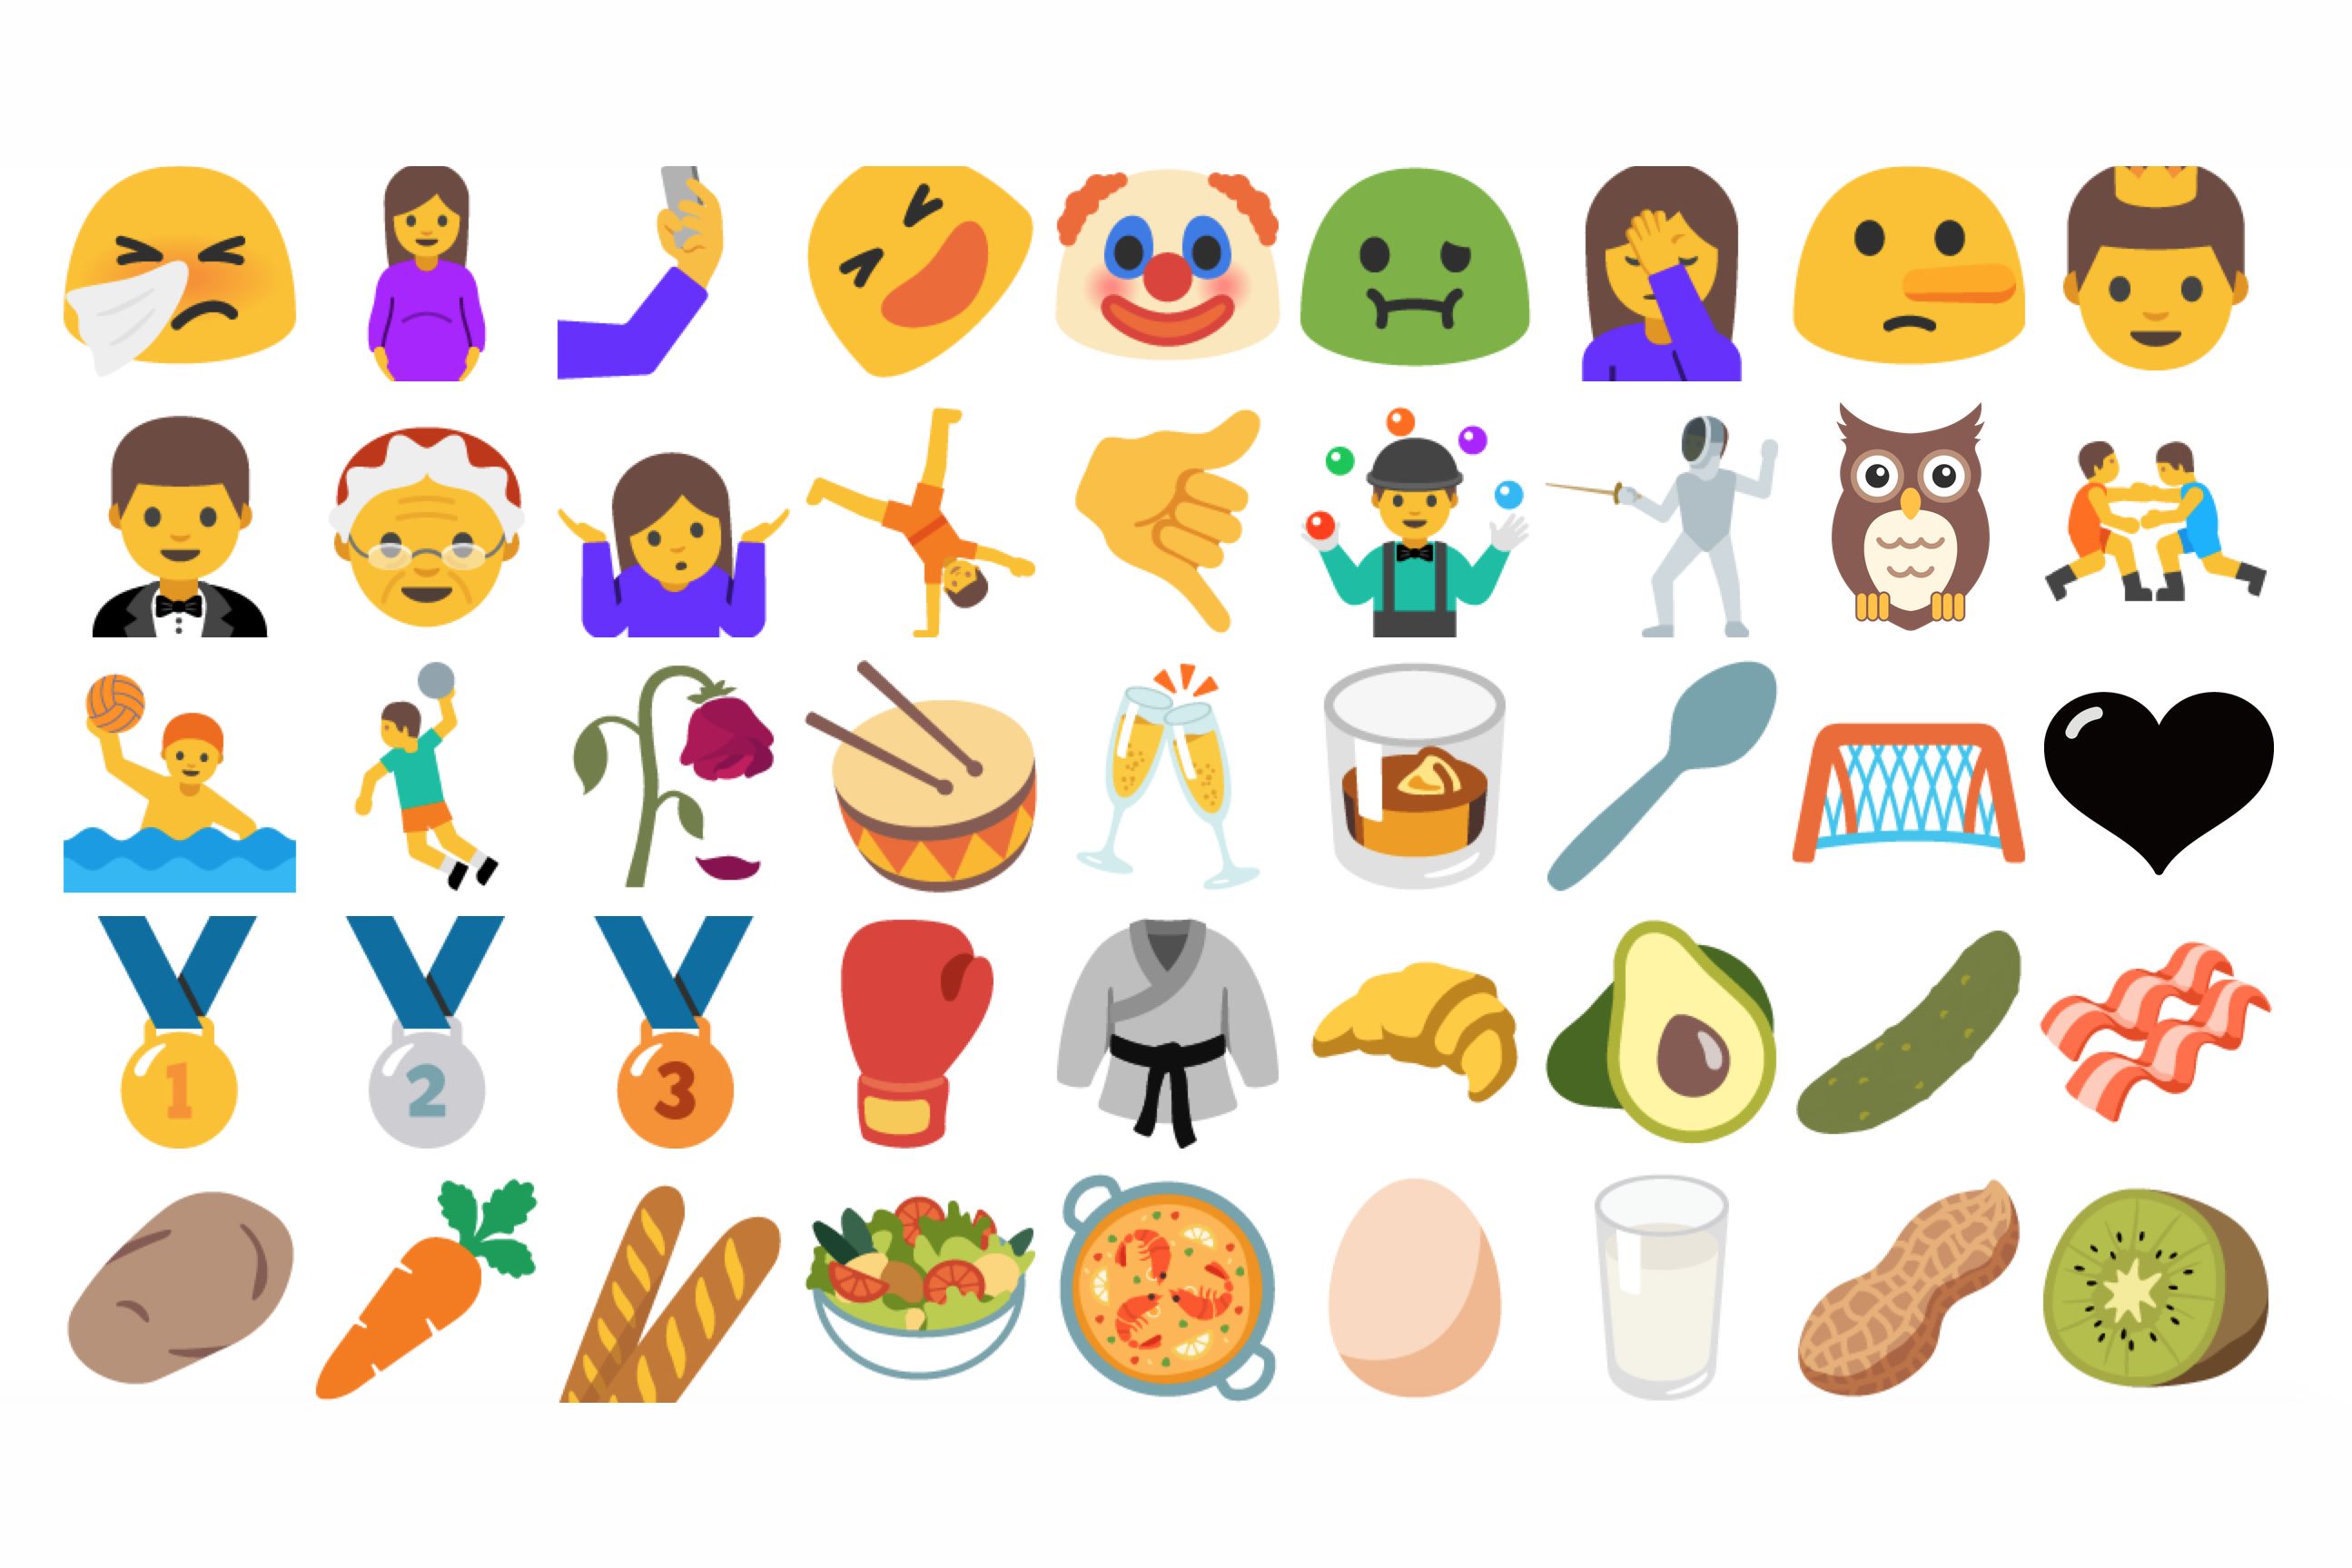 Role emoji. ЭМОДЖИ back. Калаш эмодзи. Unicode Emoji. Meet Emoji.